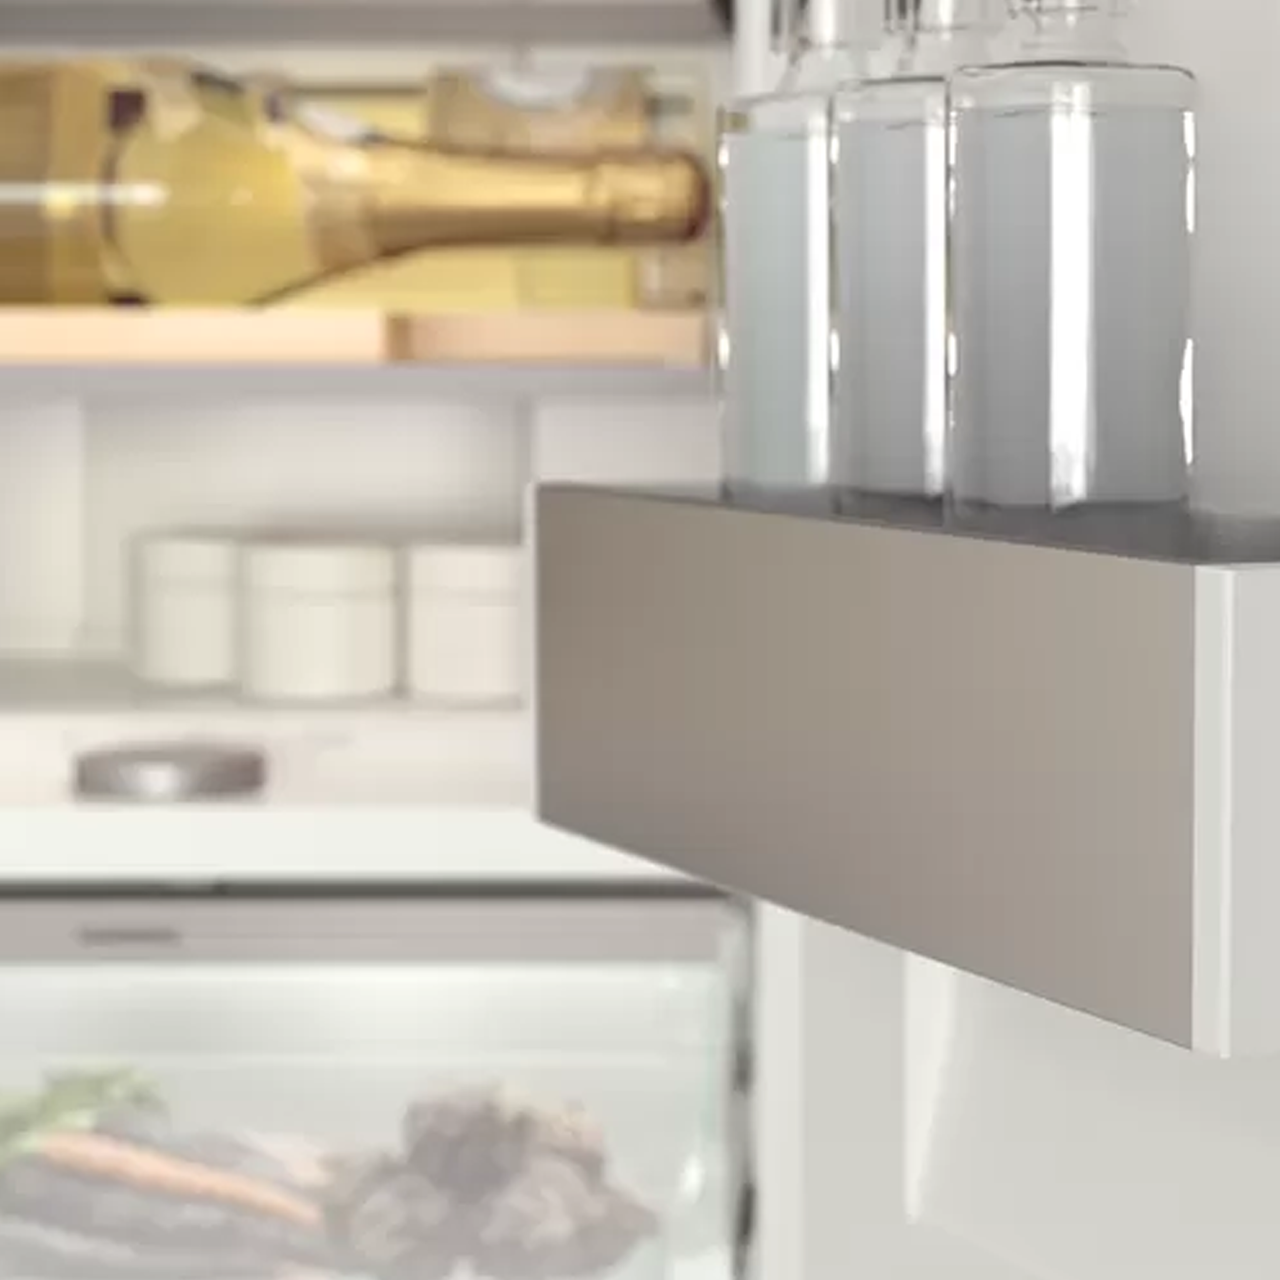 Vario S200 - Refrigerator/Freezer combination